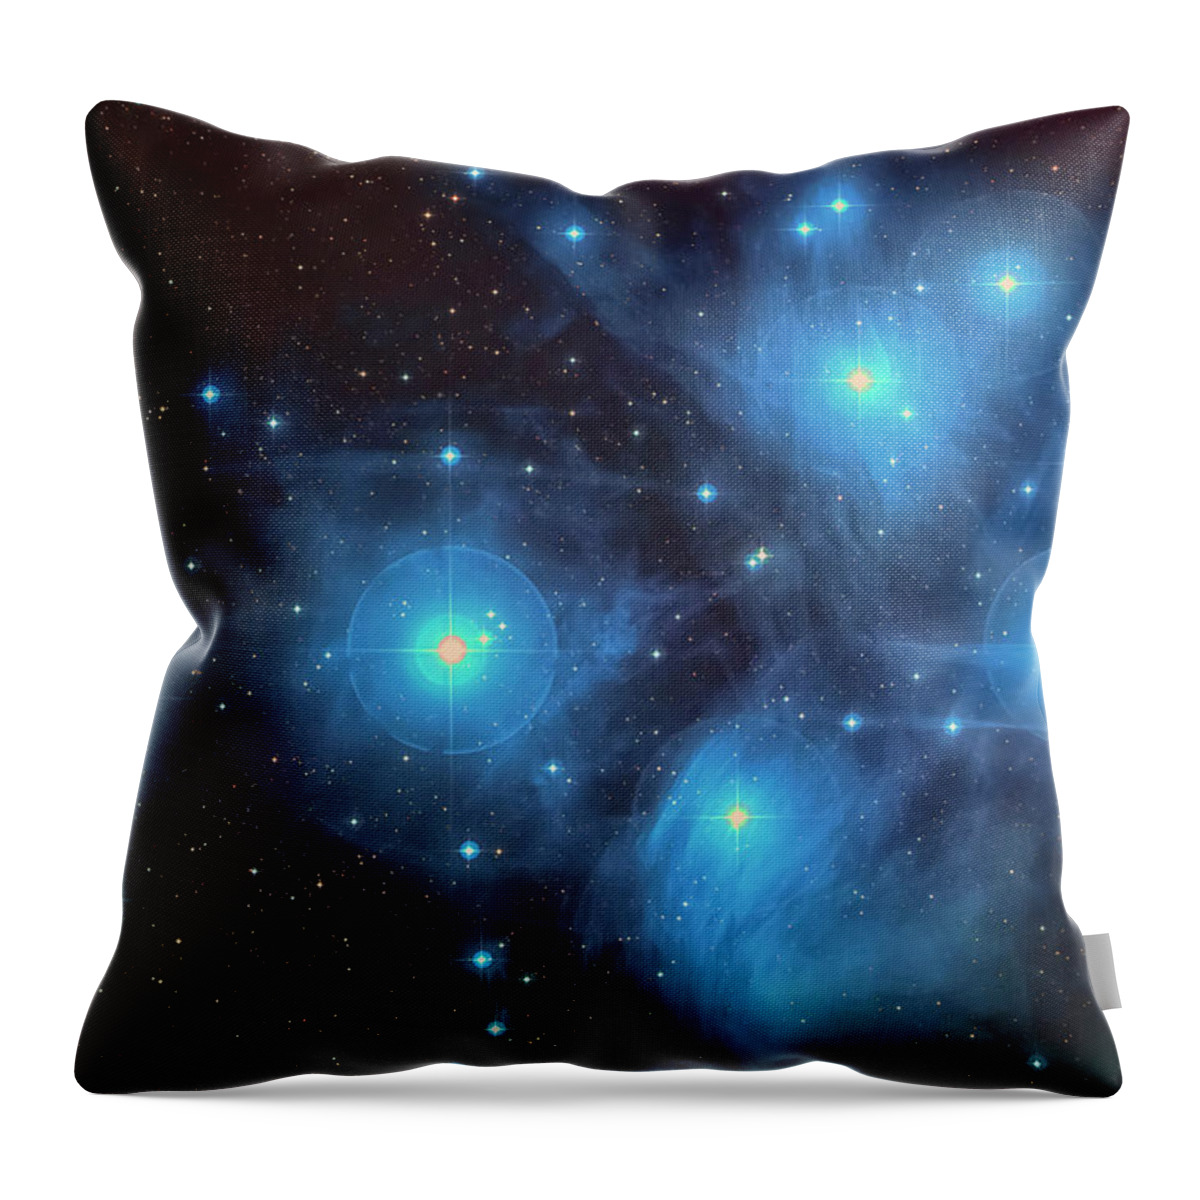 Pleiades Throw Pillow featuring the photograph The Pleiades by Mango Art